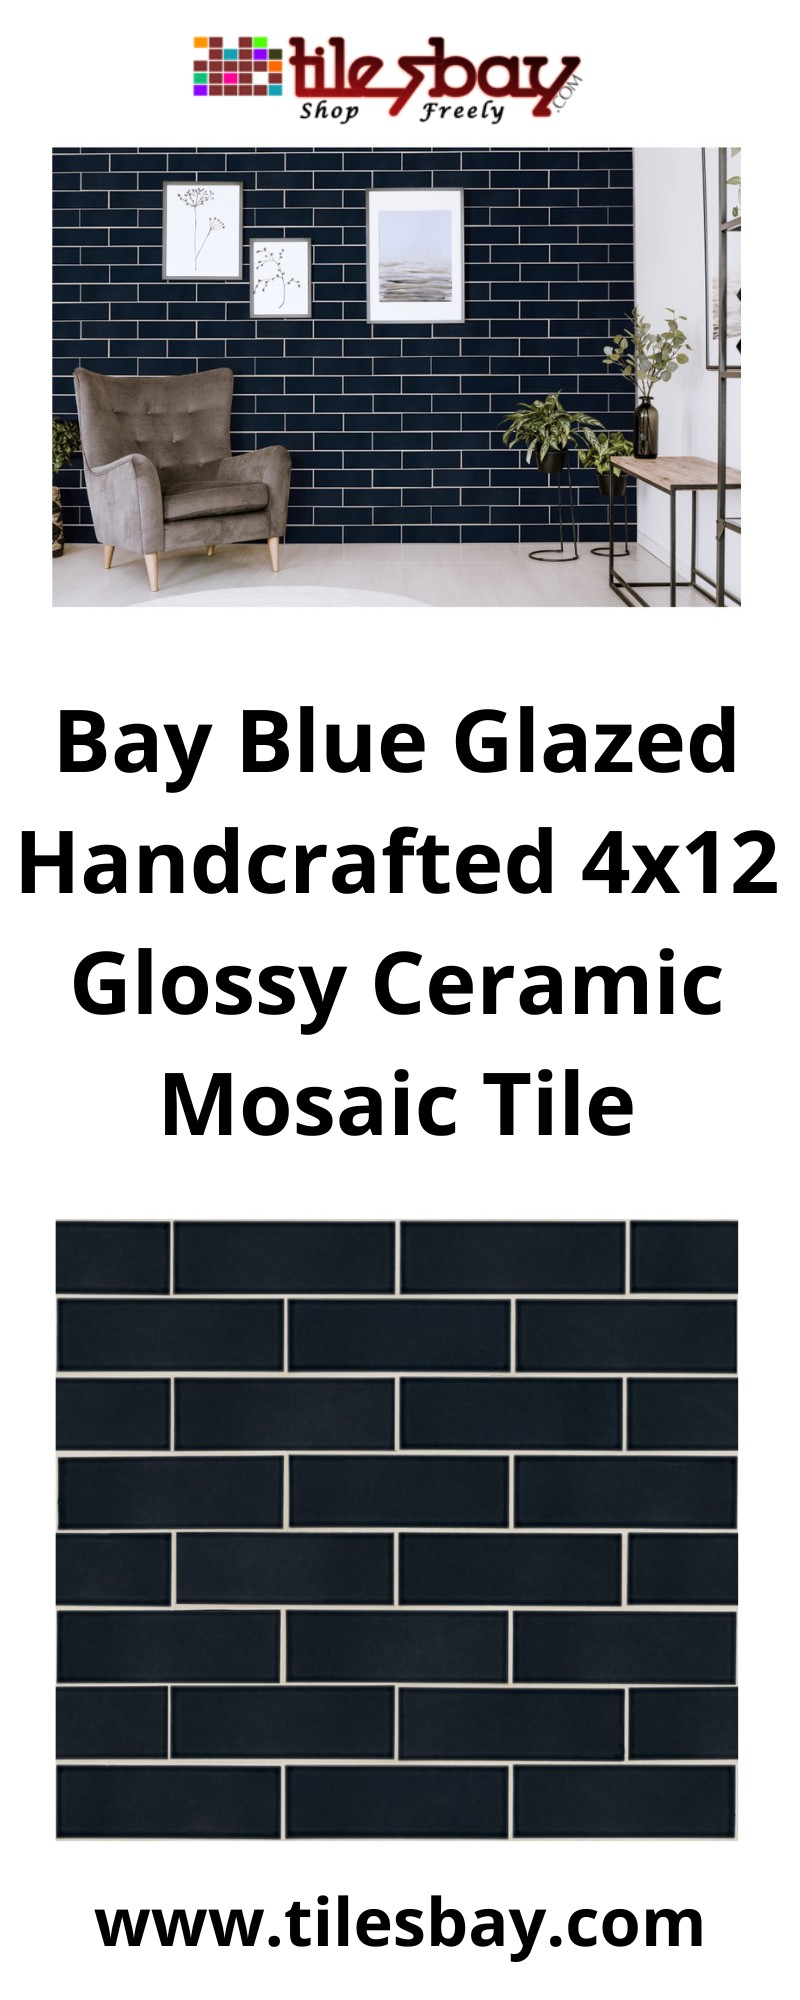 Bay Blue Glazed Handcrafted 4x12 Glossy Ceramic Mosaic Tile